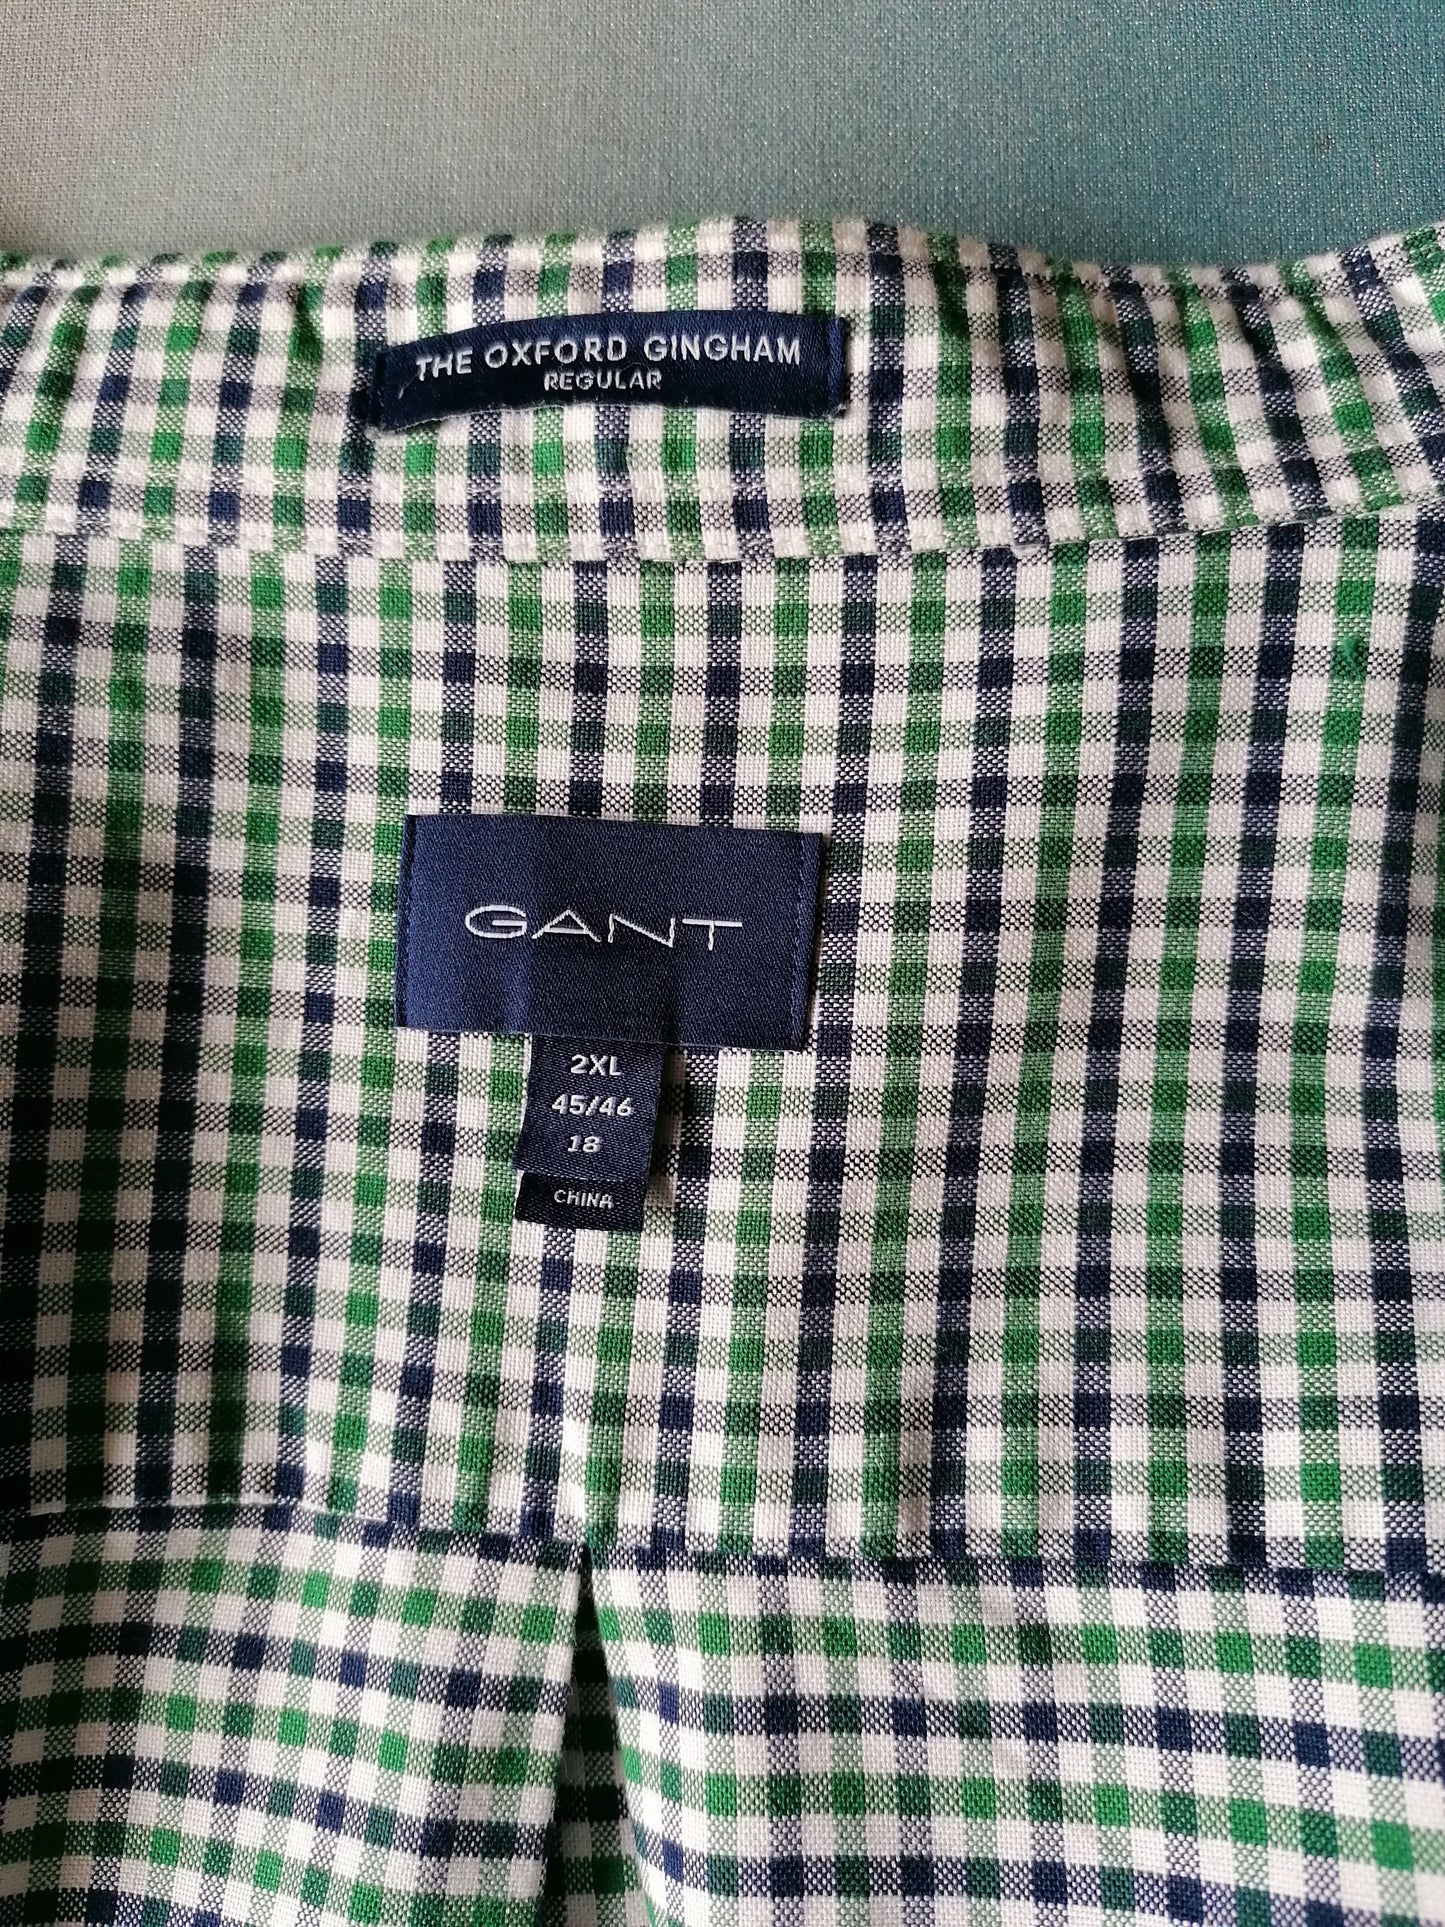 GANT overhemd. Blauw Groen geblokt. Maat XXL / 2XL. Type Oxford Gingham.